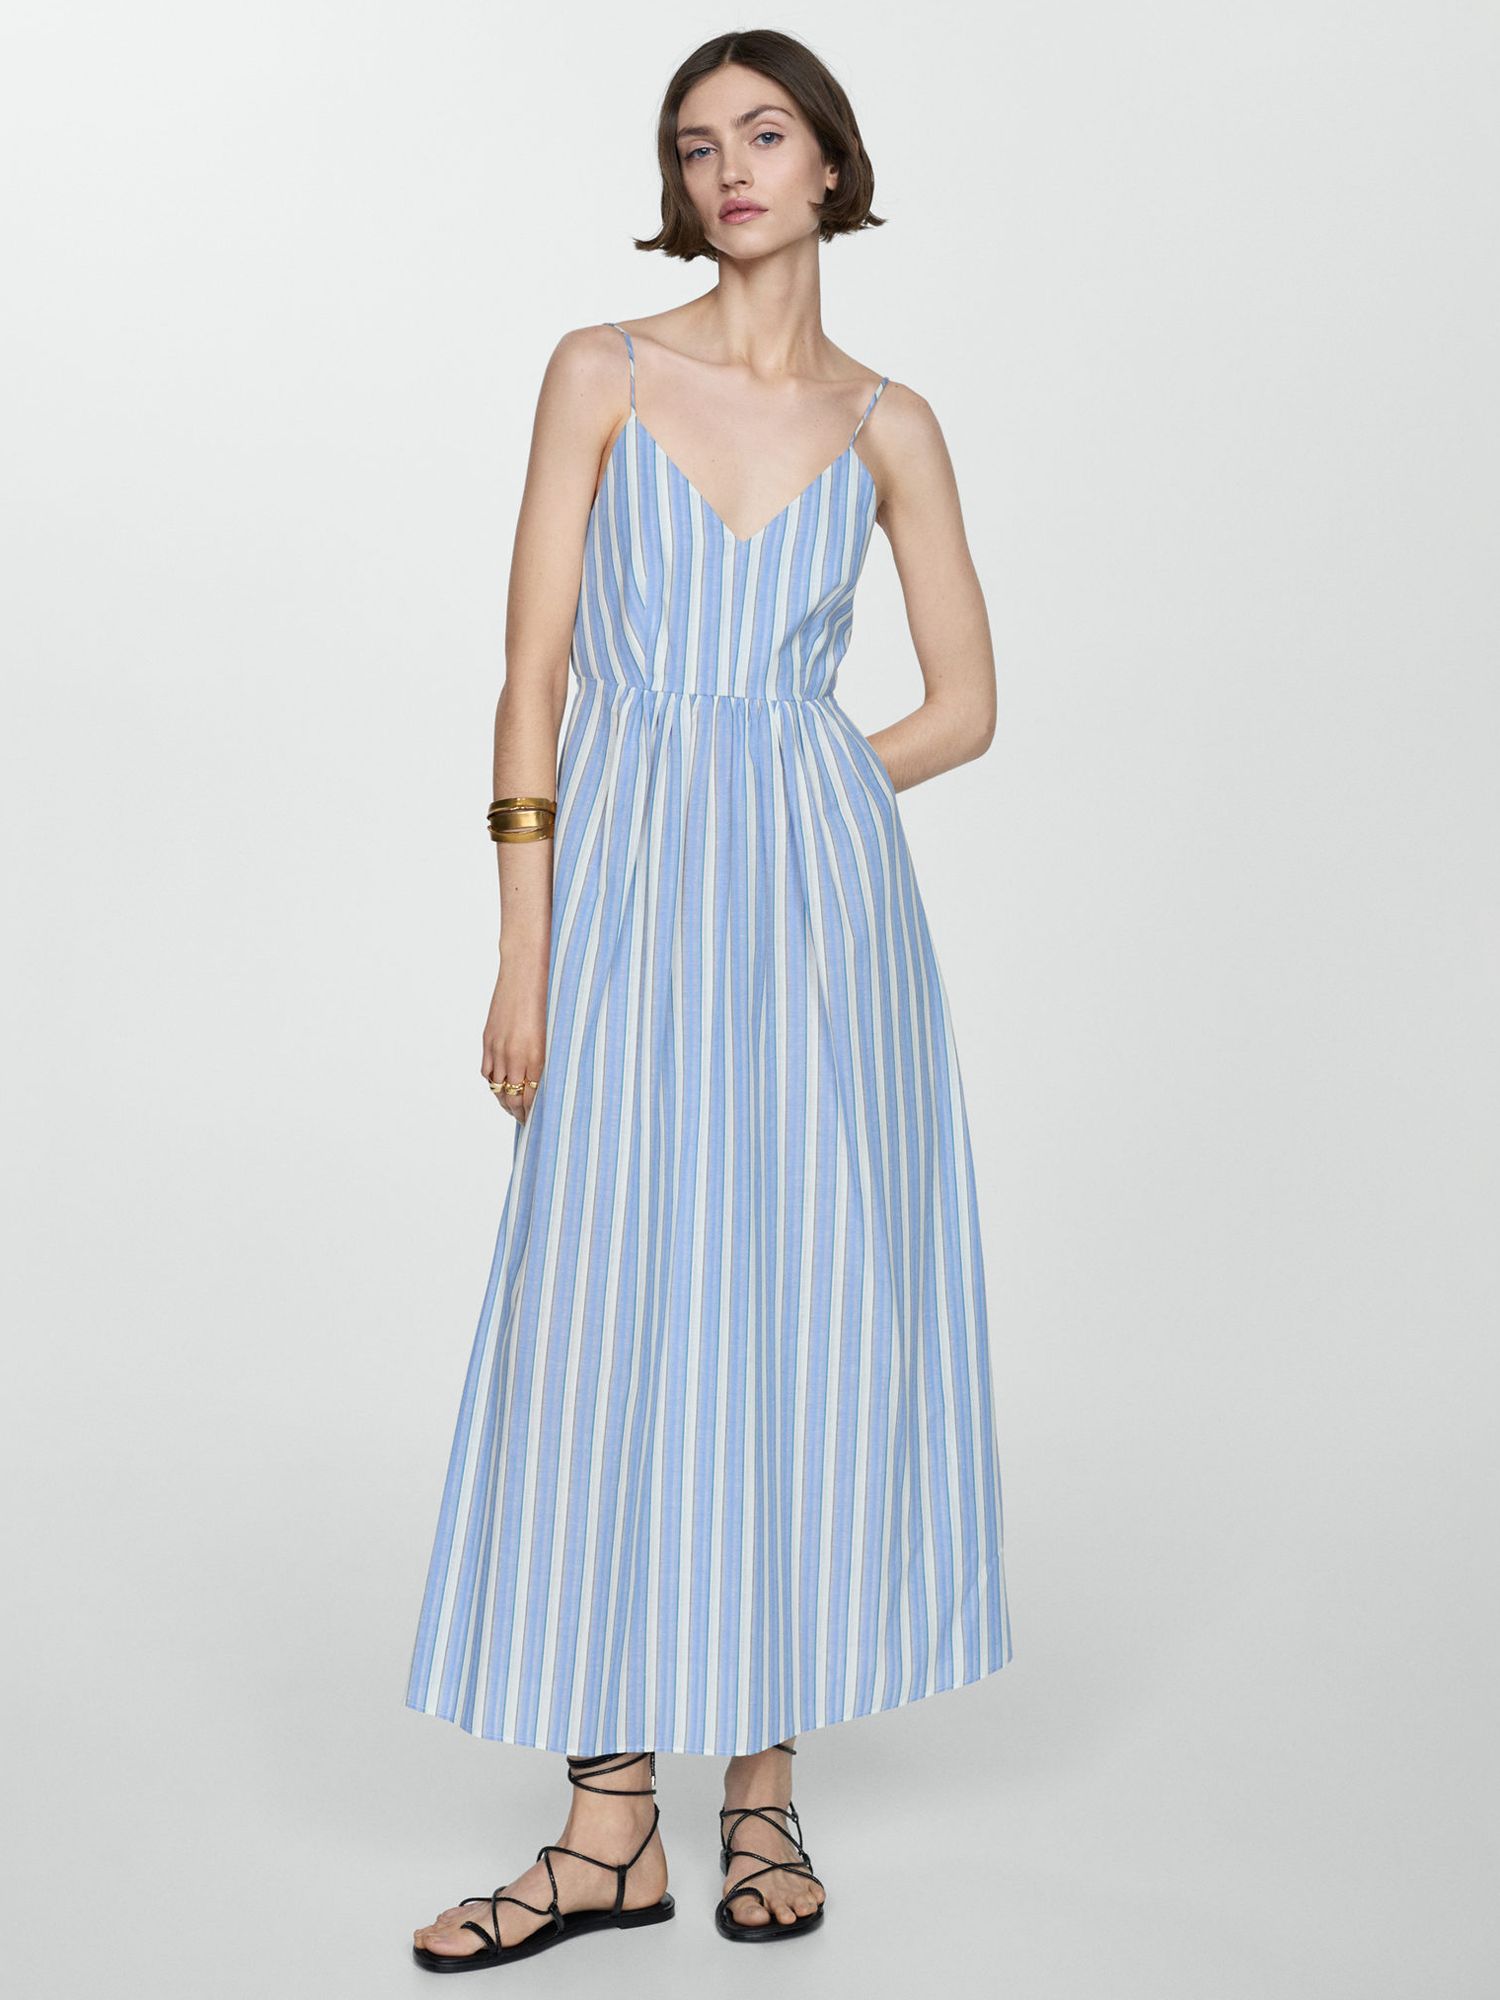 Mango Cristi Cut-Out Striped Maxi Dress, Pastel Blue, 10